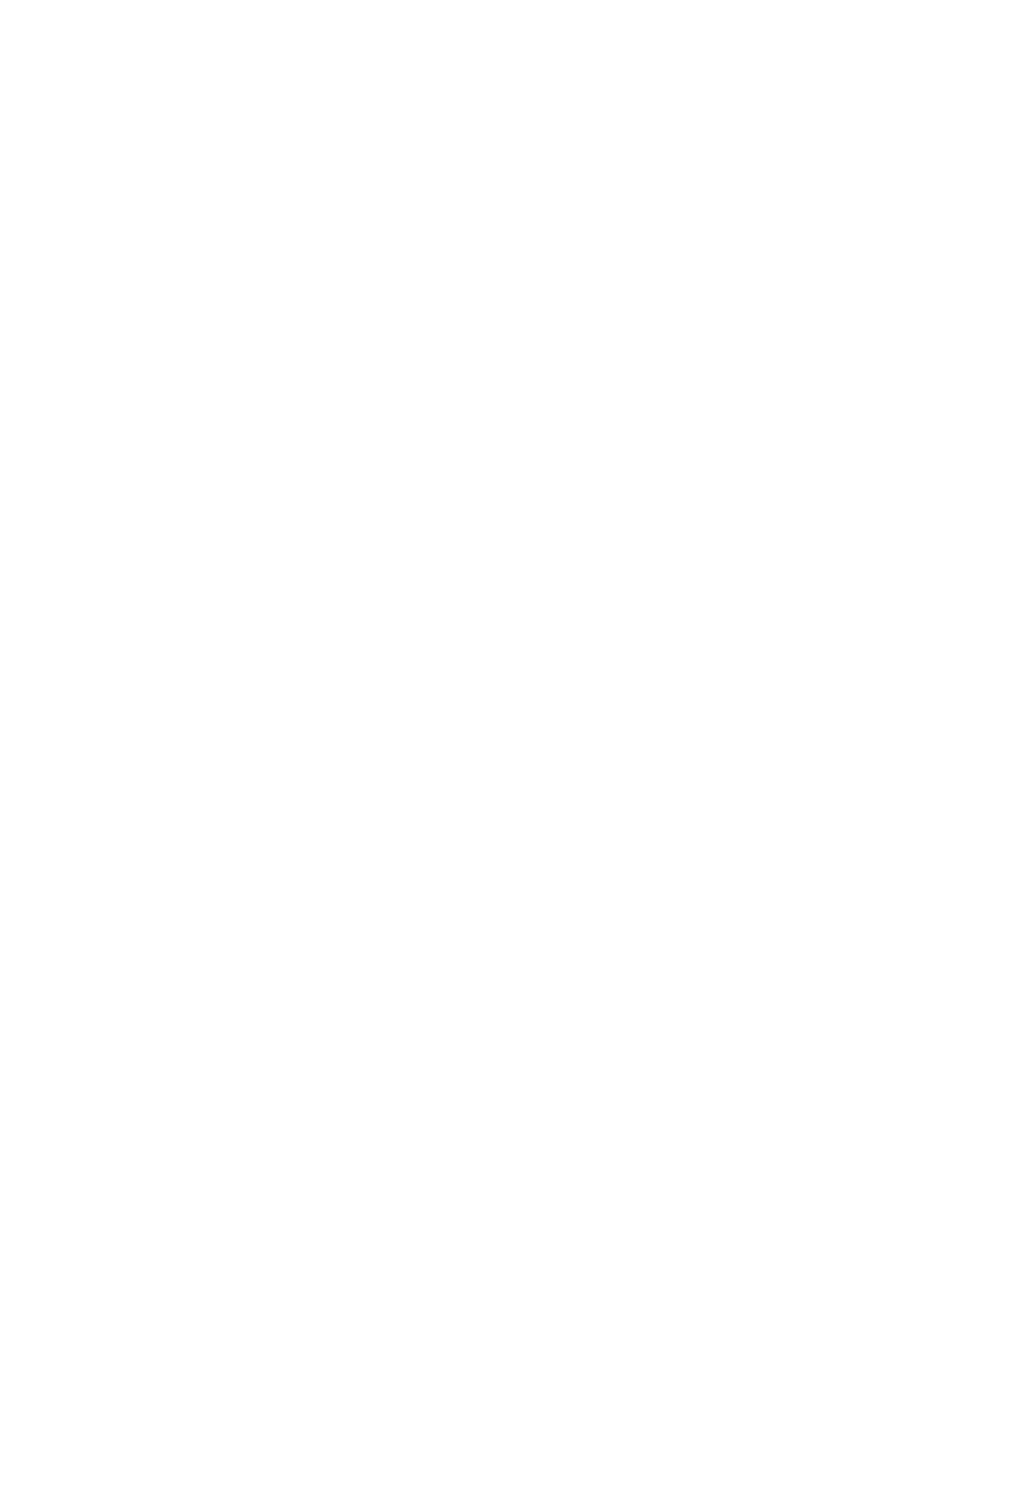 Culture Builder